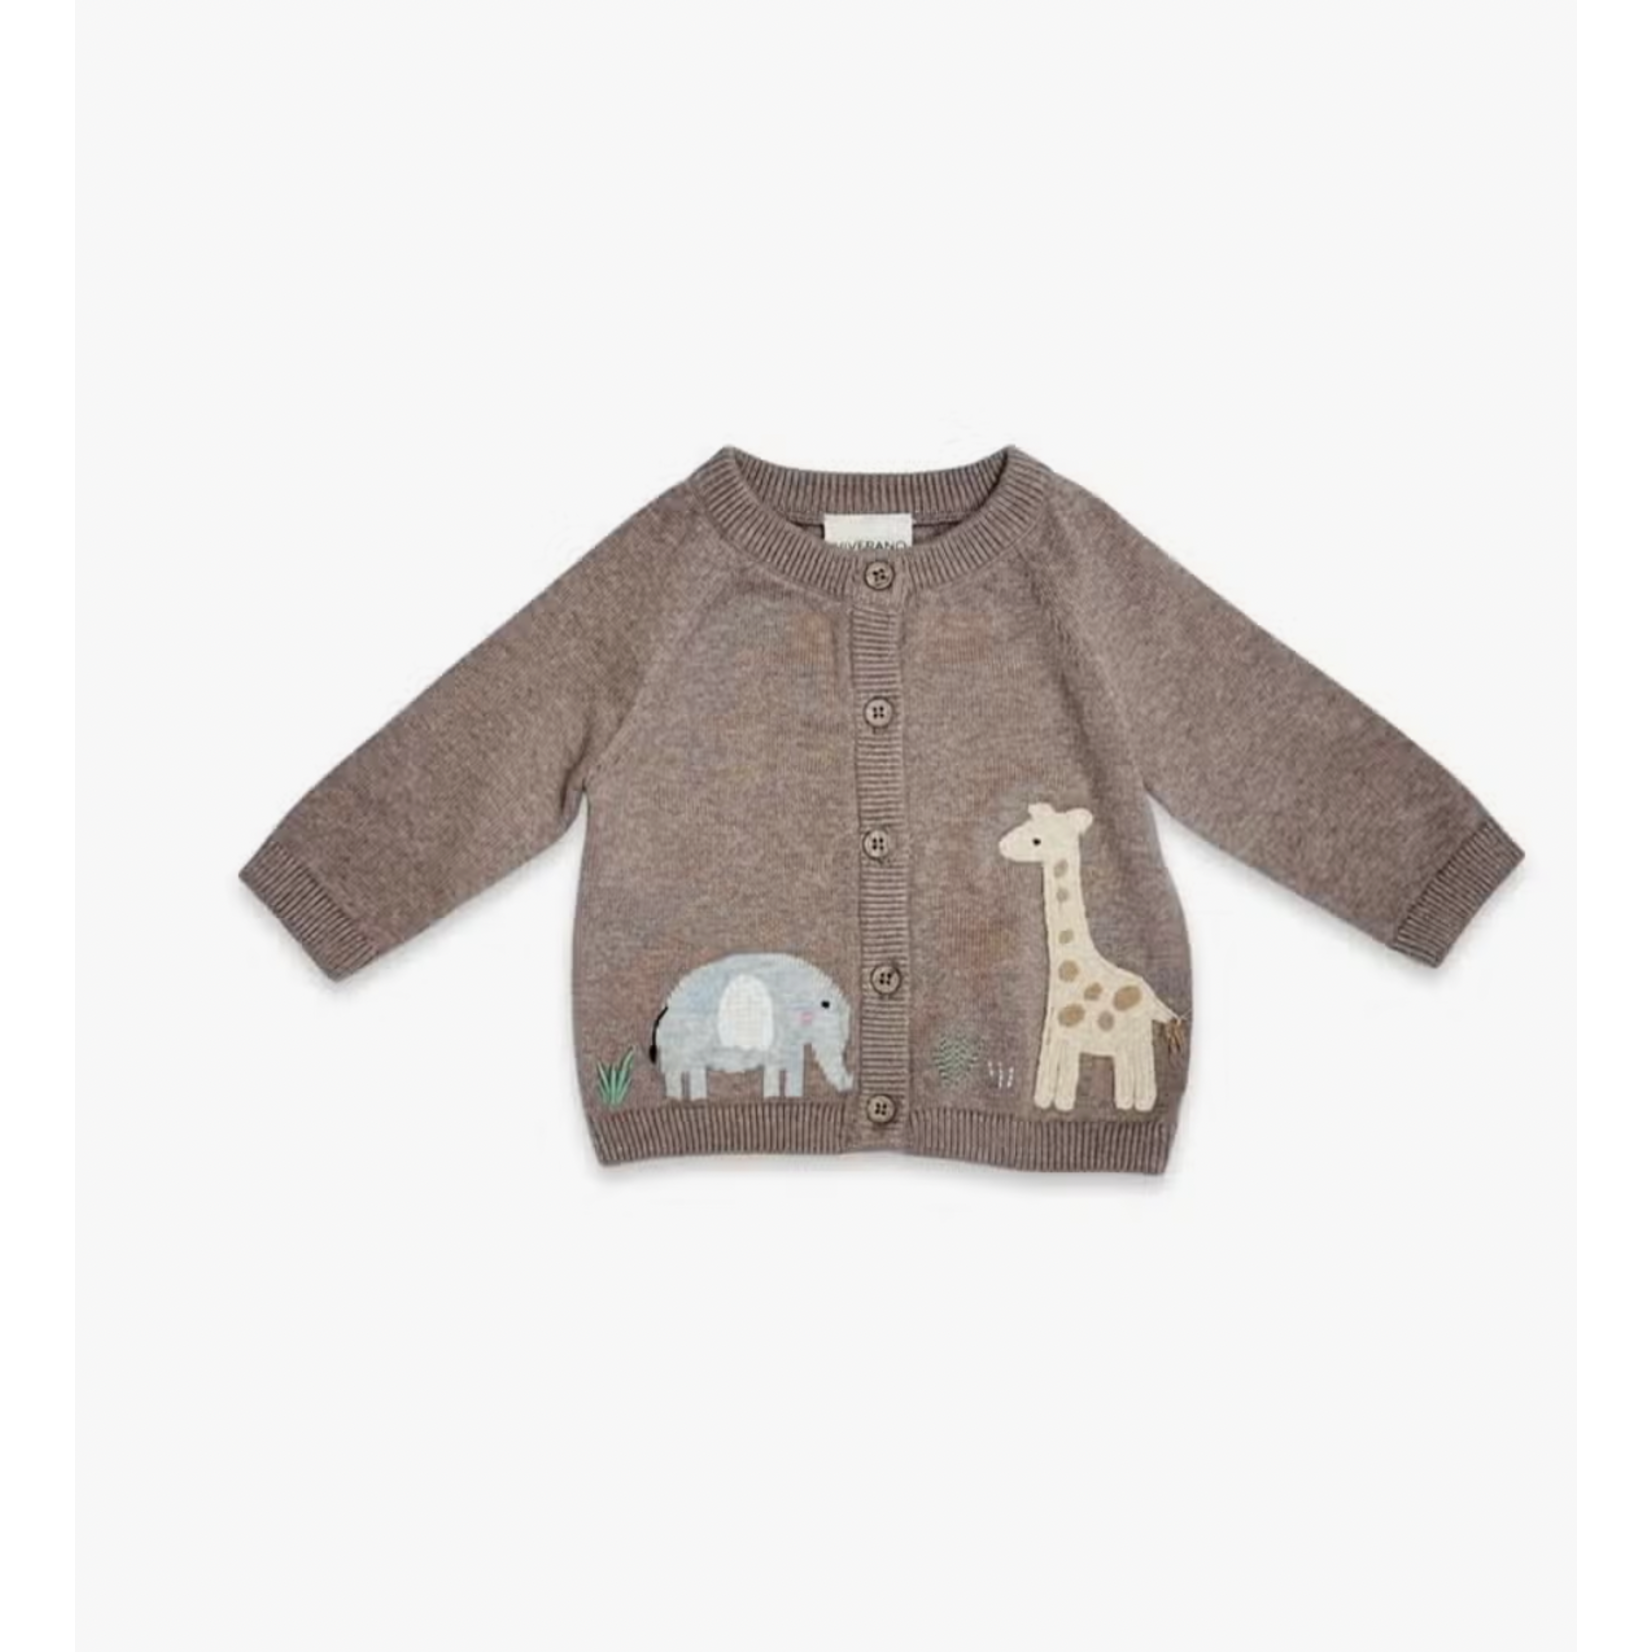 Viverano Organics Elephant Giraffe Pointelle Baby Cardigan Sweater-Cafe Latte